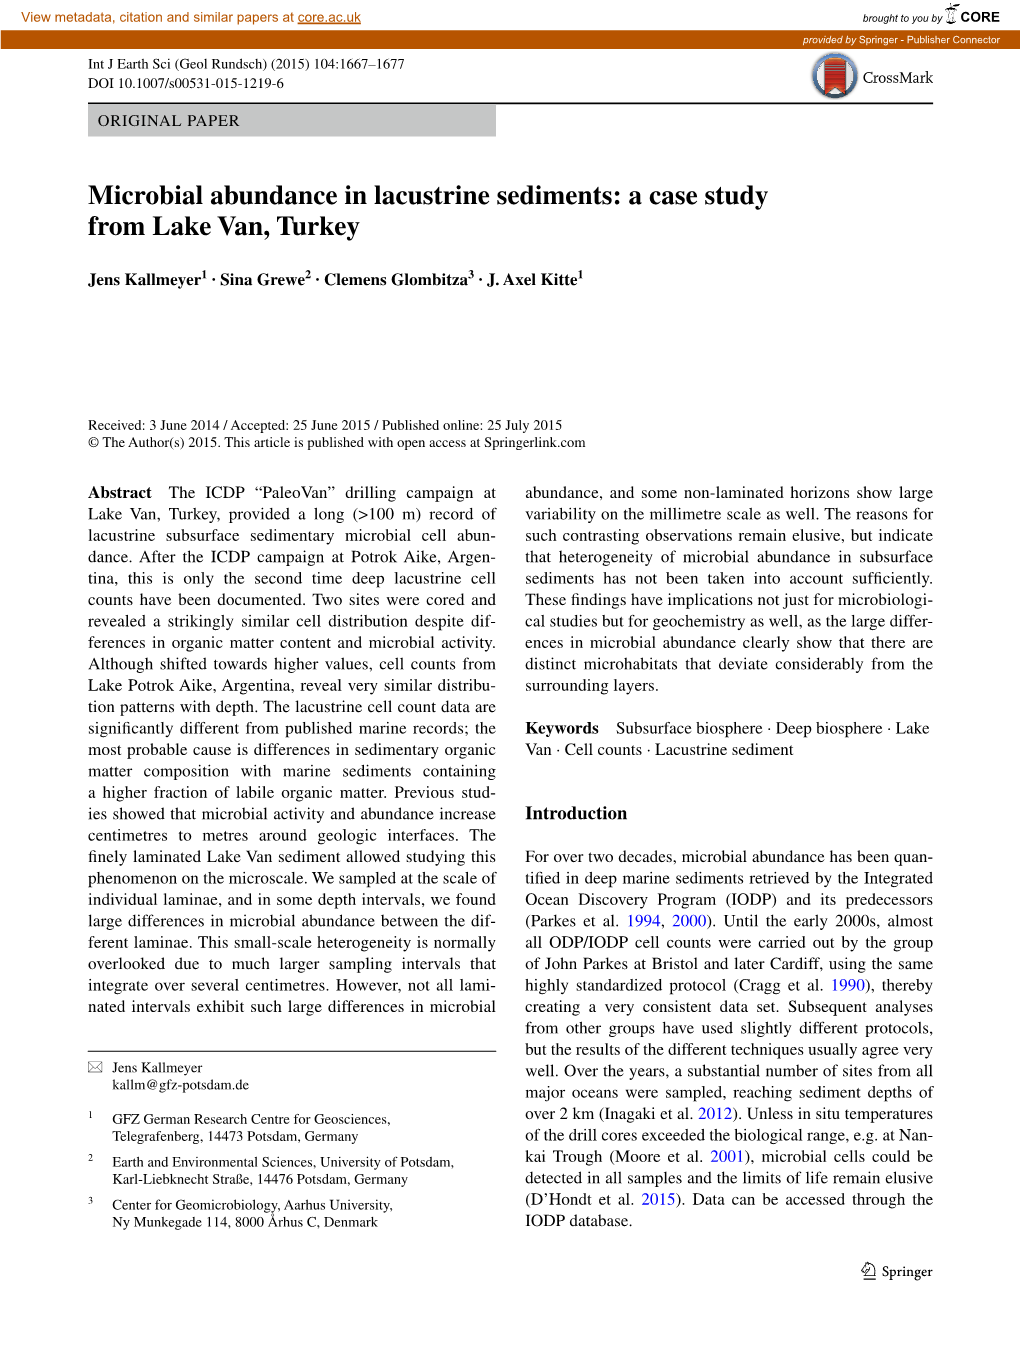 Microbial Abundance in Lacustrine Sediments: a Case Study from Lake Van, Turkey